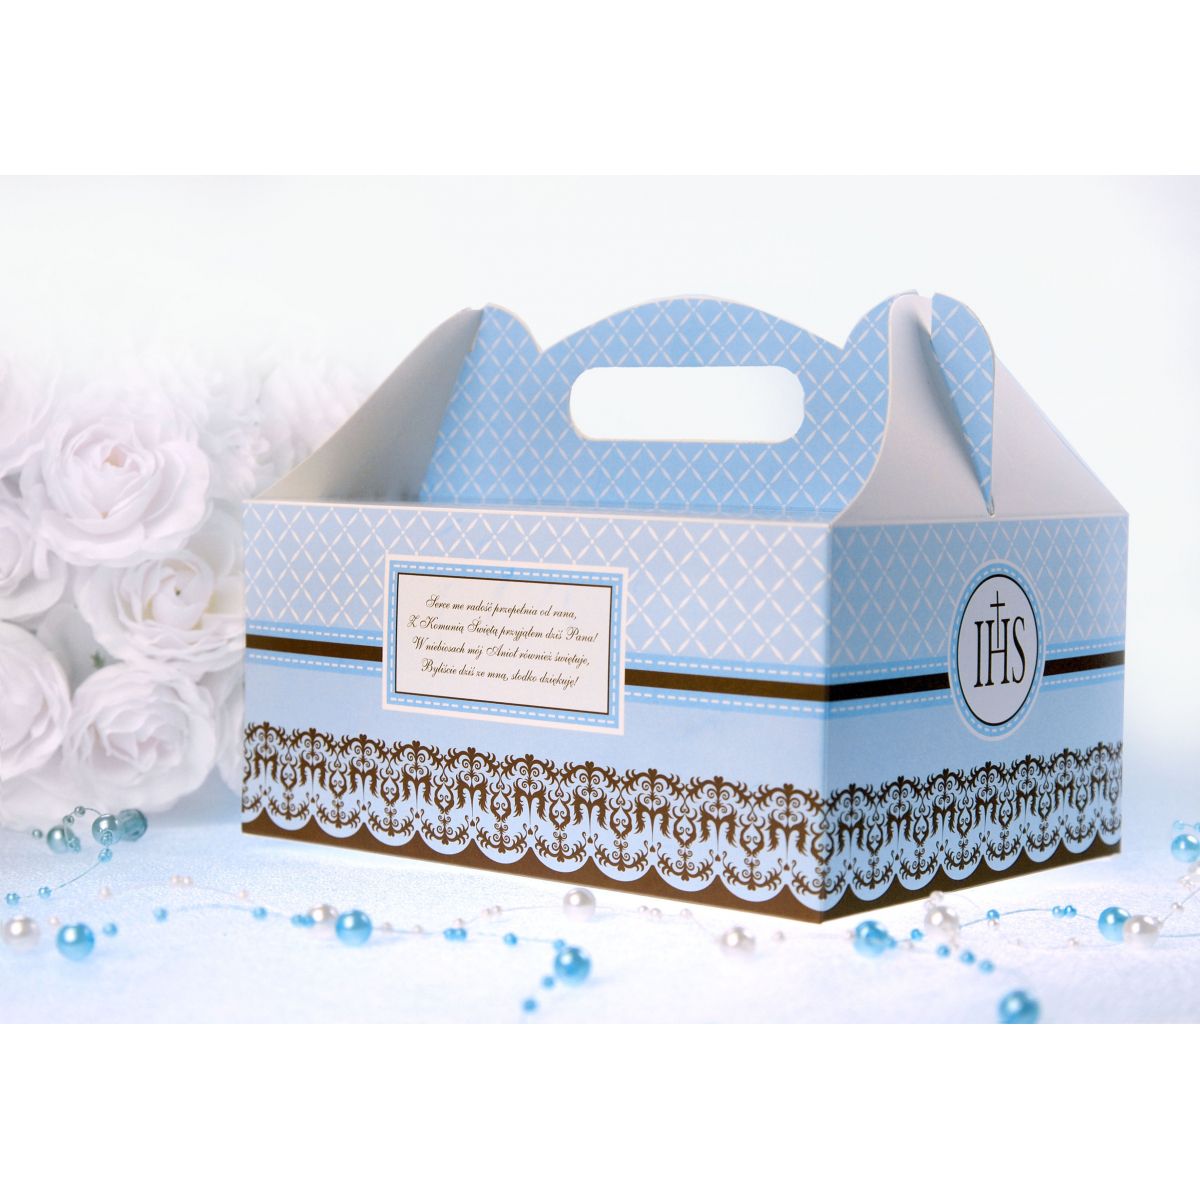 Ozdobne pudełka na ciasto komunijne Partydeco 190x140x90 10 sztuk (PUDCS6/B)